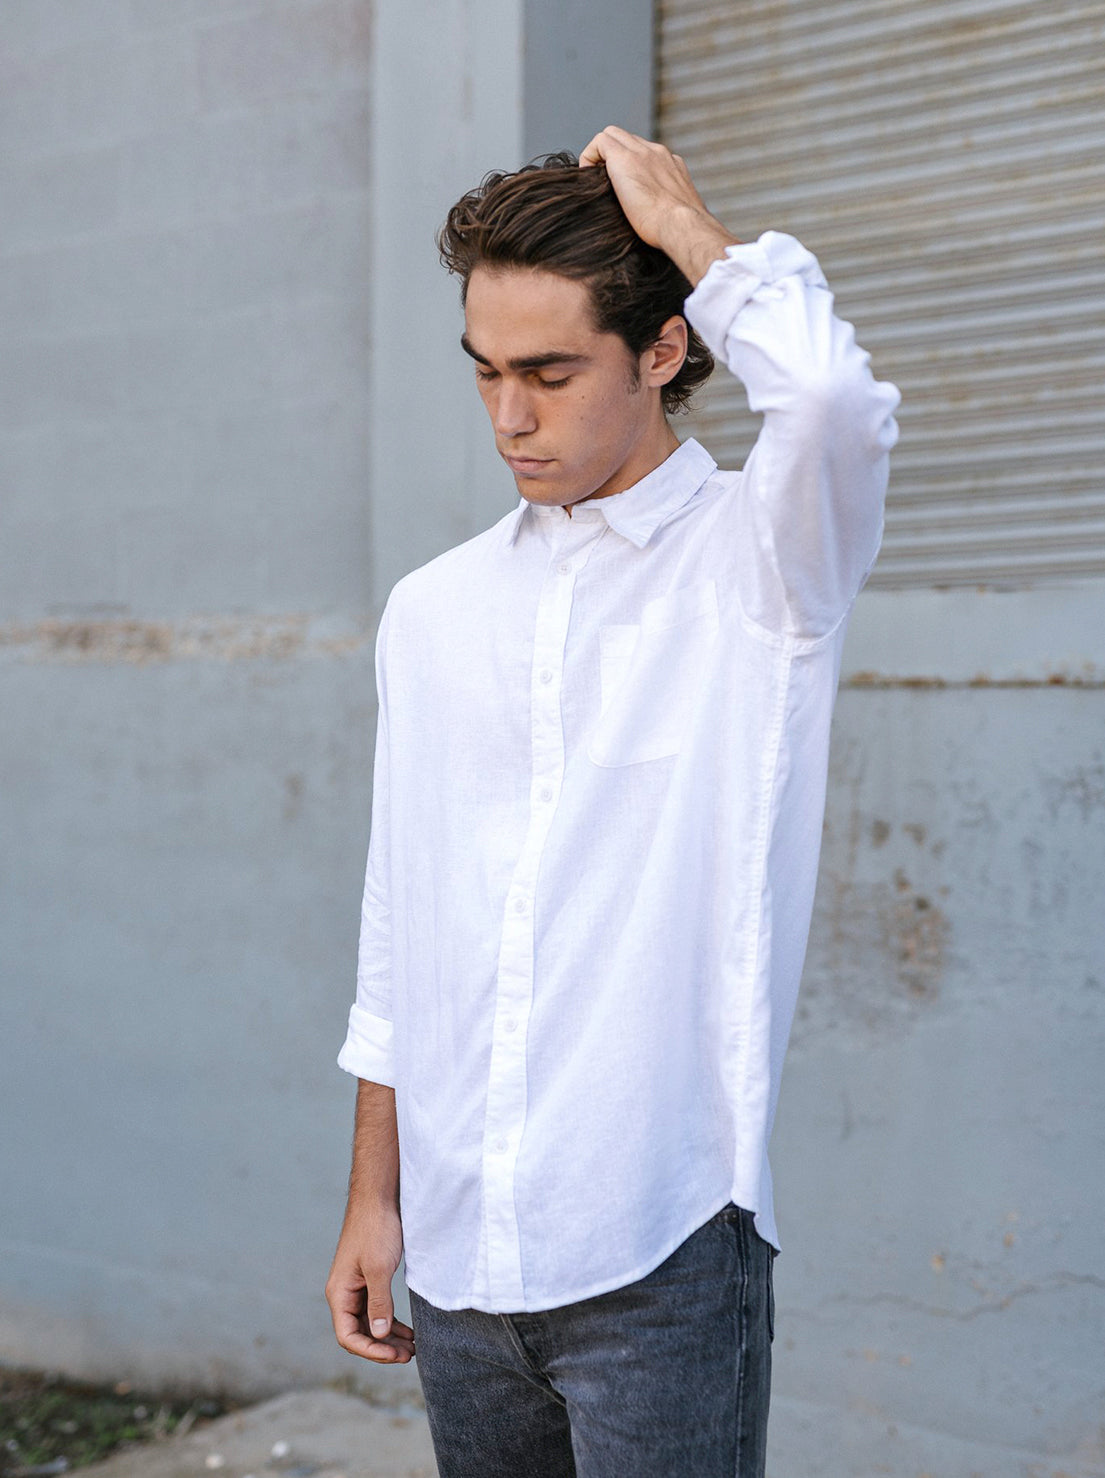 Hemp Clothing Australia - Newtown Shirt - Long Sleeve - White